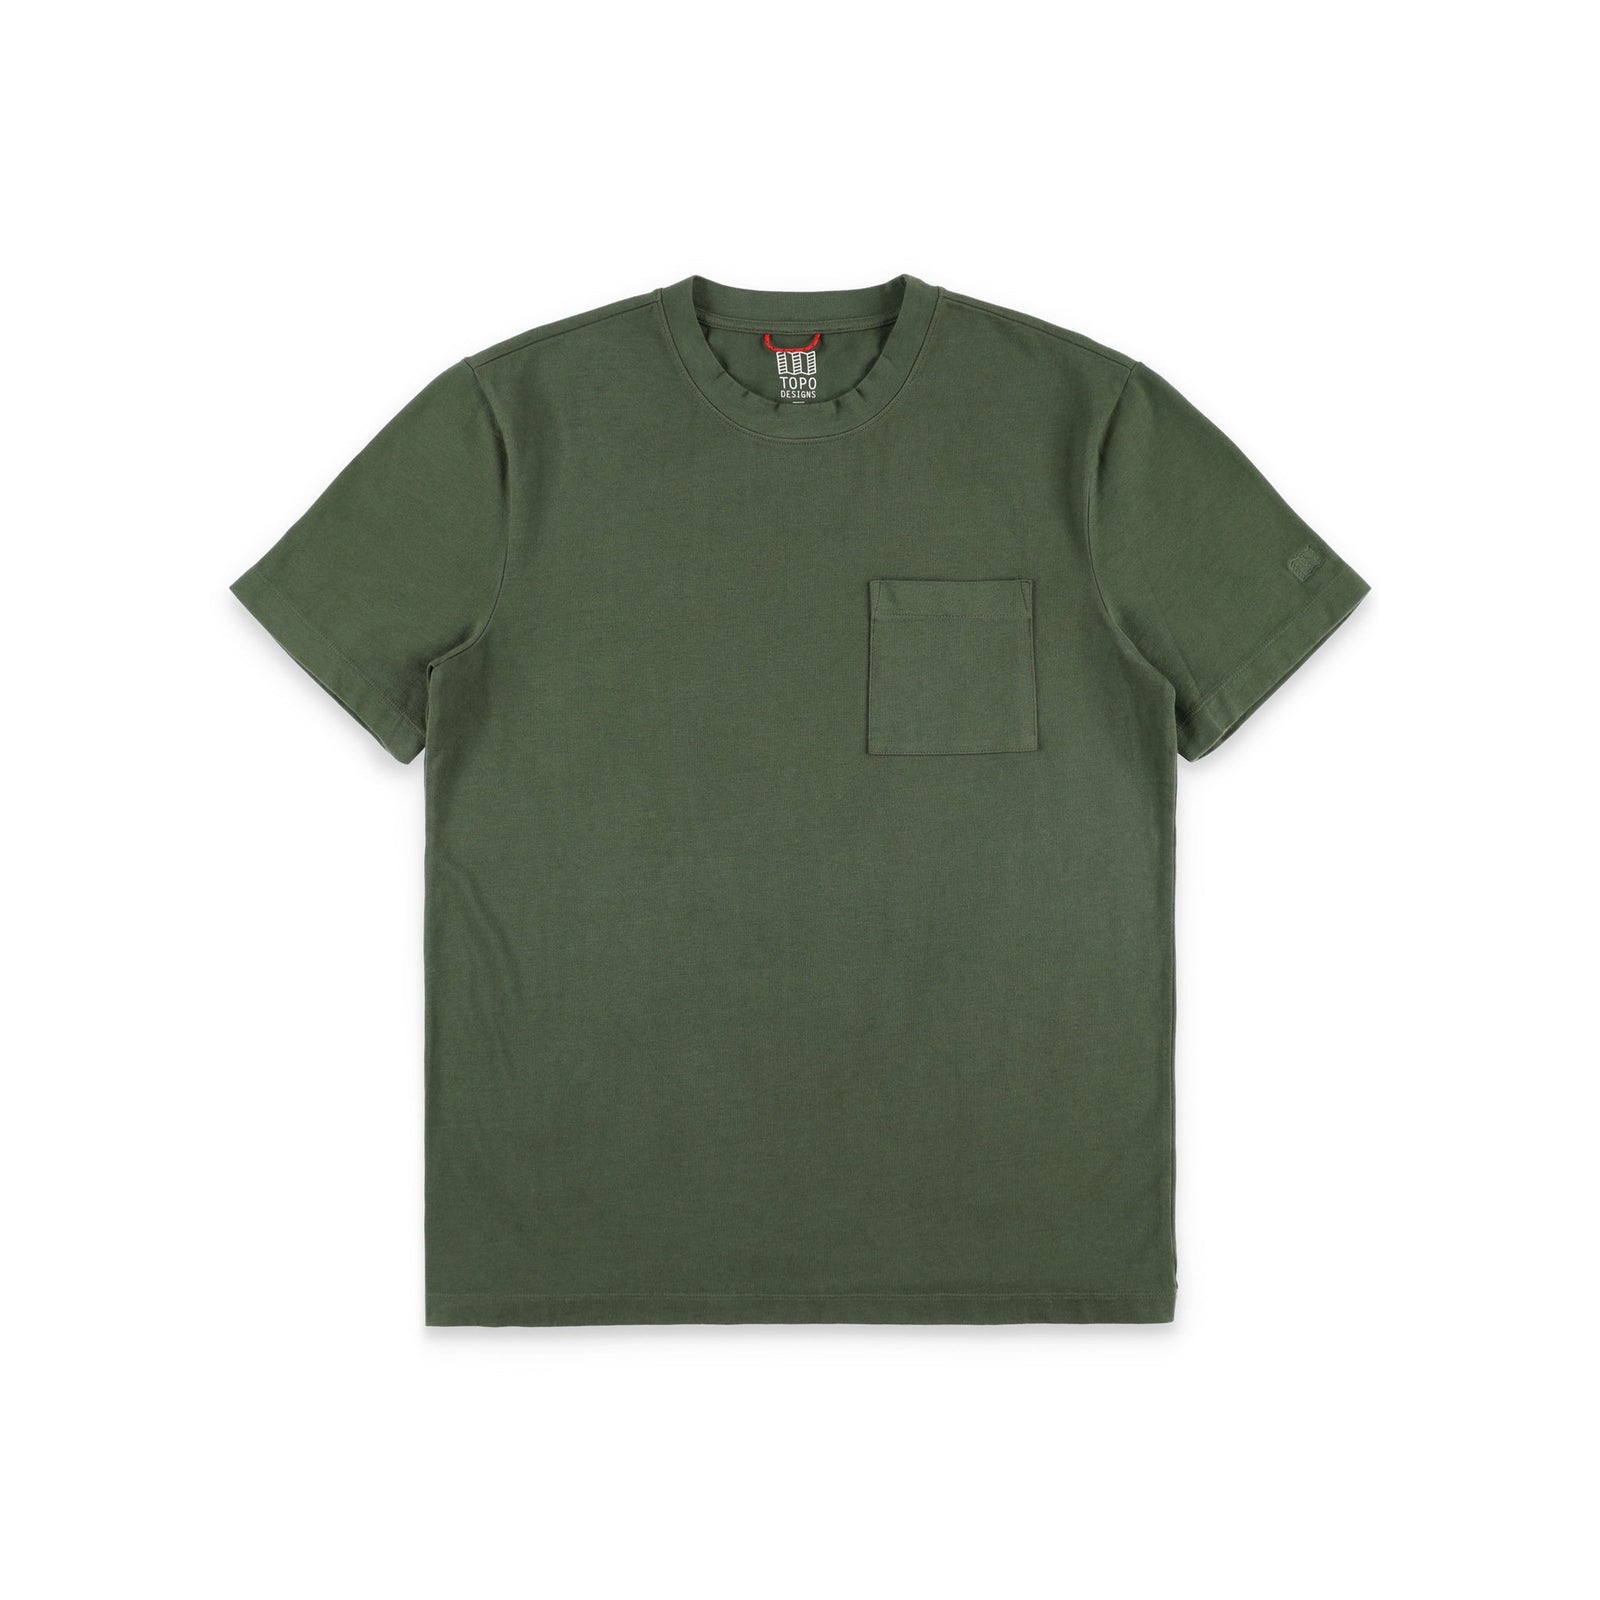 Topo Designs Men's Dirt Pocket Tee 100% organic cotton short sleeve t-shirt in "olive" green